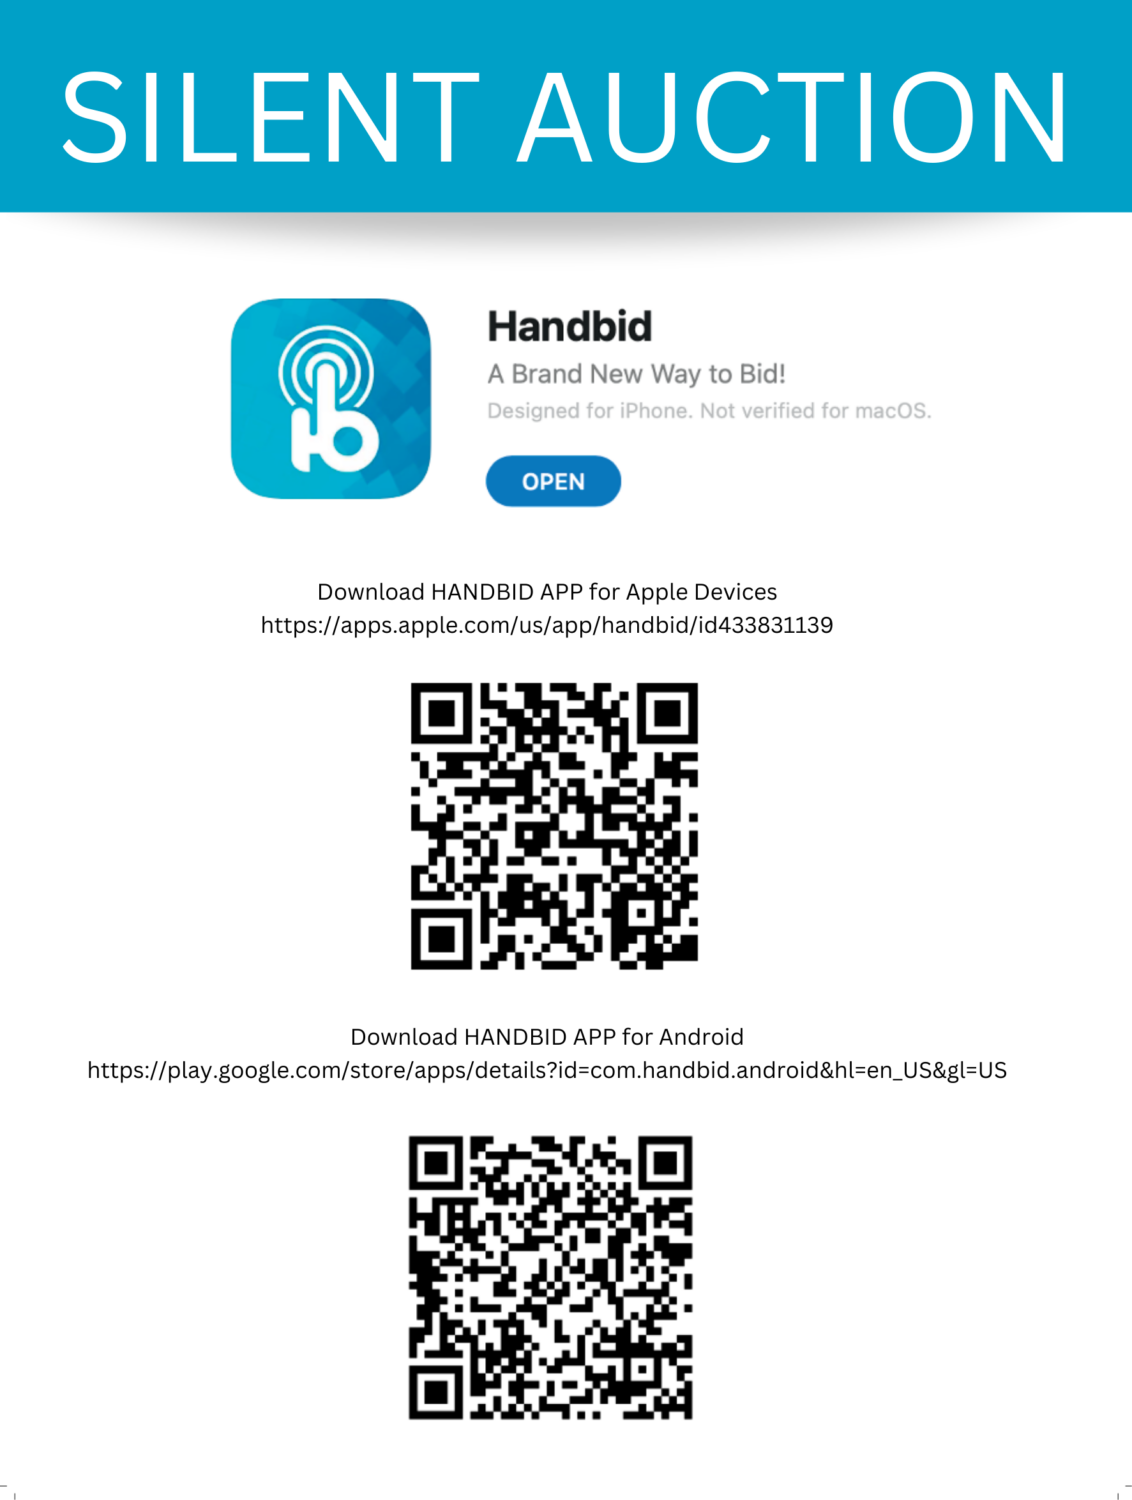 Download HANDBID APP For Apple Devices Httpsapps.apple.comusapphandbidid433831139 Download HANDBID APP For Android Httpsplay.google.comstoreappsdetailsid=com.handbid.android&hl=en US&gl=US.pdf 2